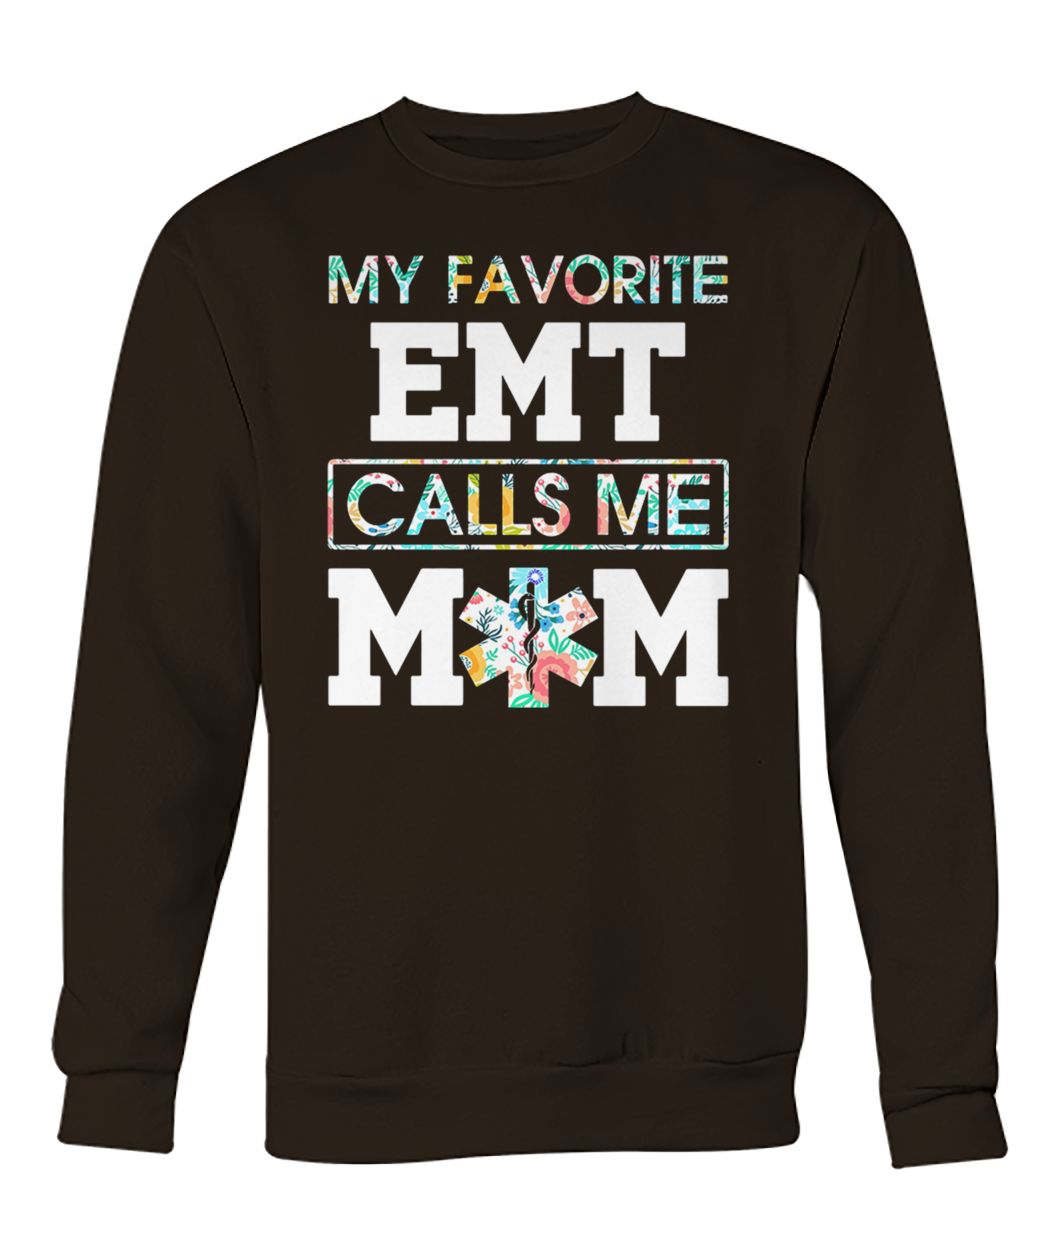 Floral my favorite EMT calls me mom crew neck sweatshirt